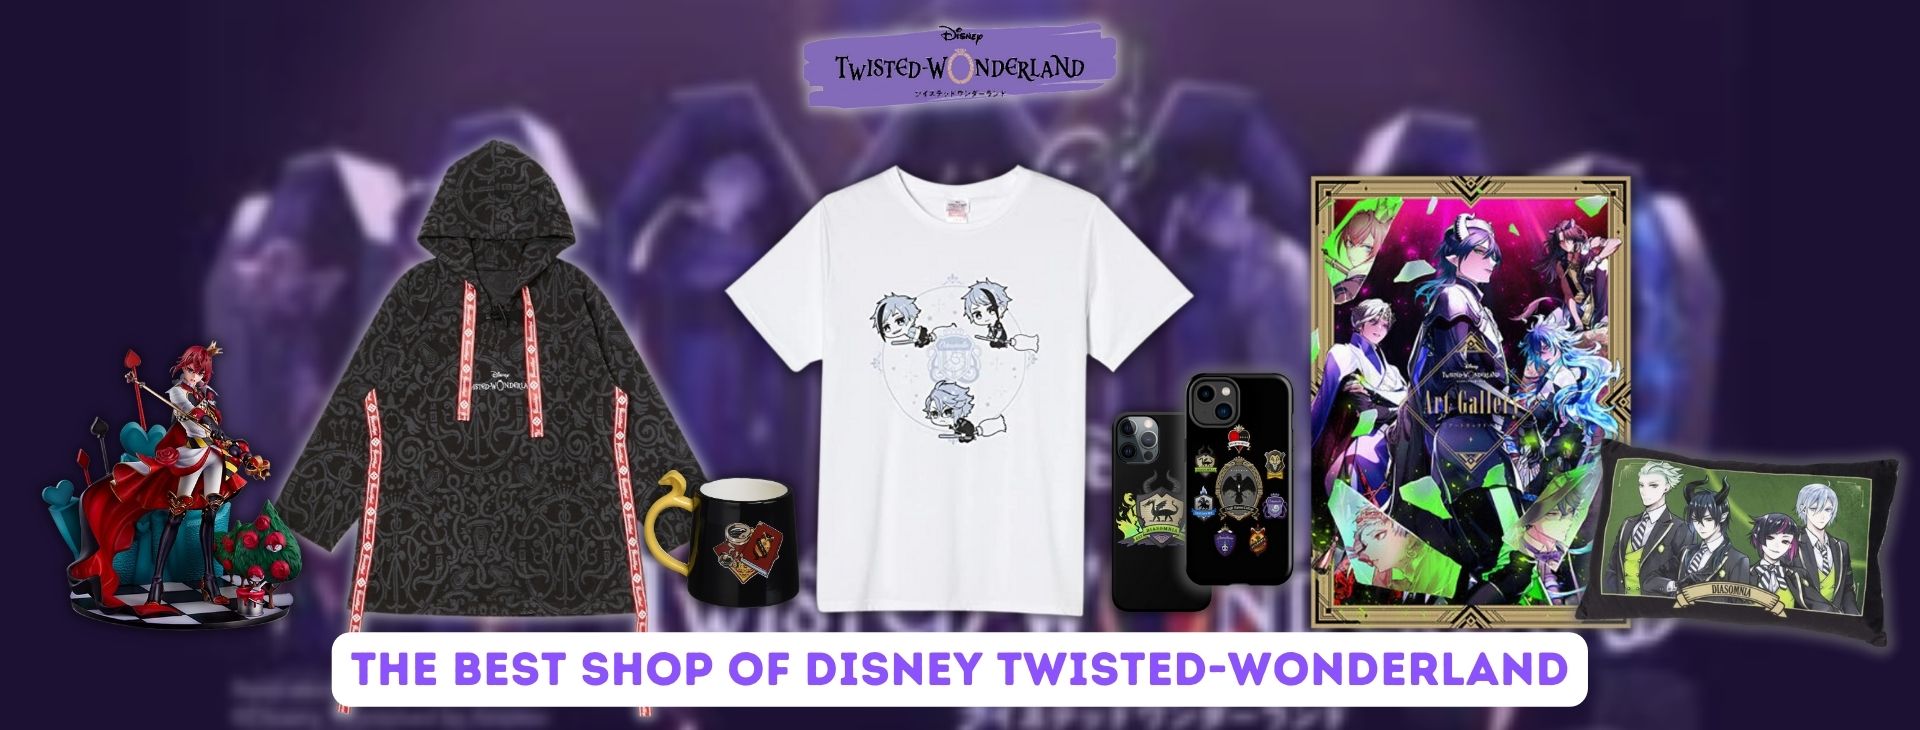 Disney Twisted Wonderland Banner - Disney Twisted Wonderland Store